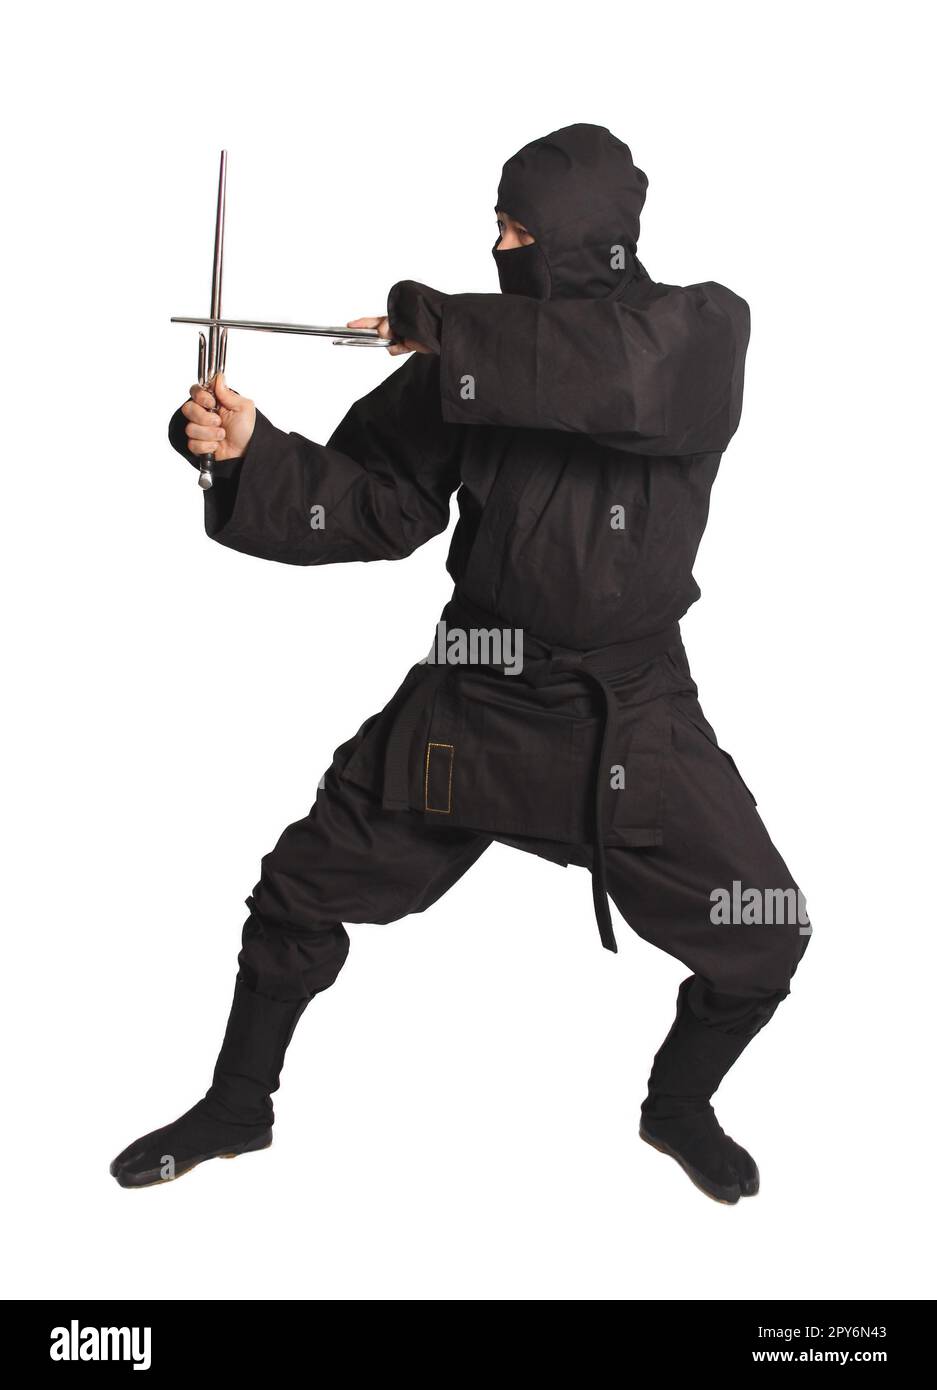 https://c8.alamy.com/comp/2PY6N43/asian-man-wearing-ninja-martial-arts-uniform-2PY6N43.jpg